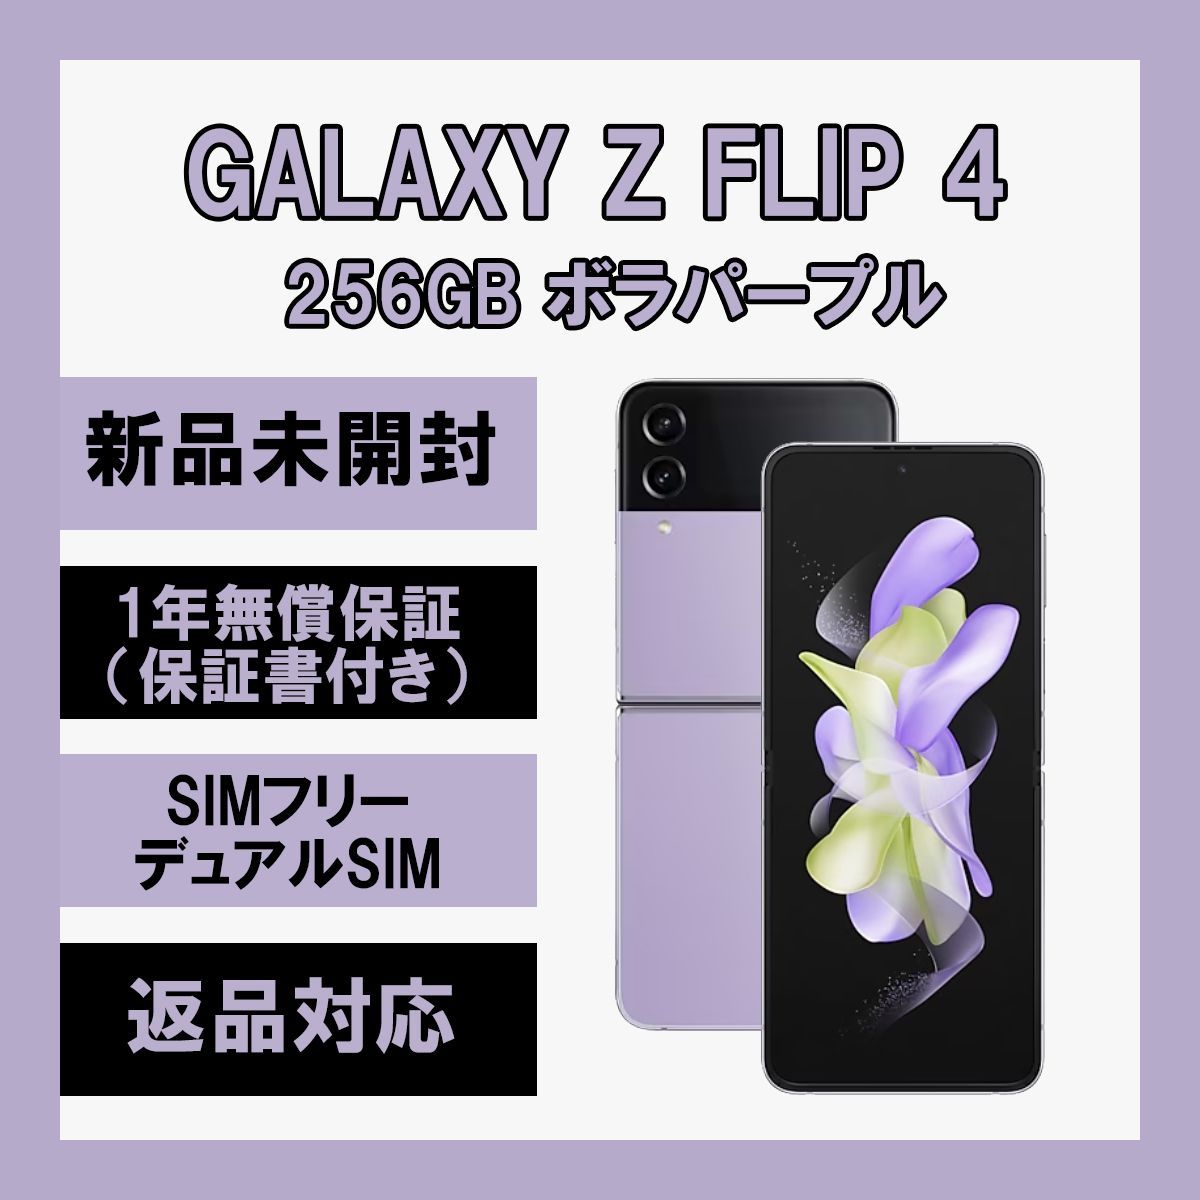 TTT様】Galaxy Flip4 ボラパープル 256G SIMフリー-